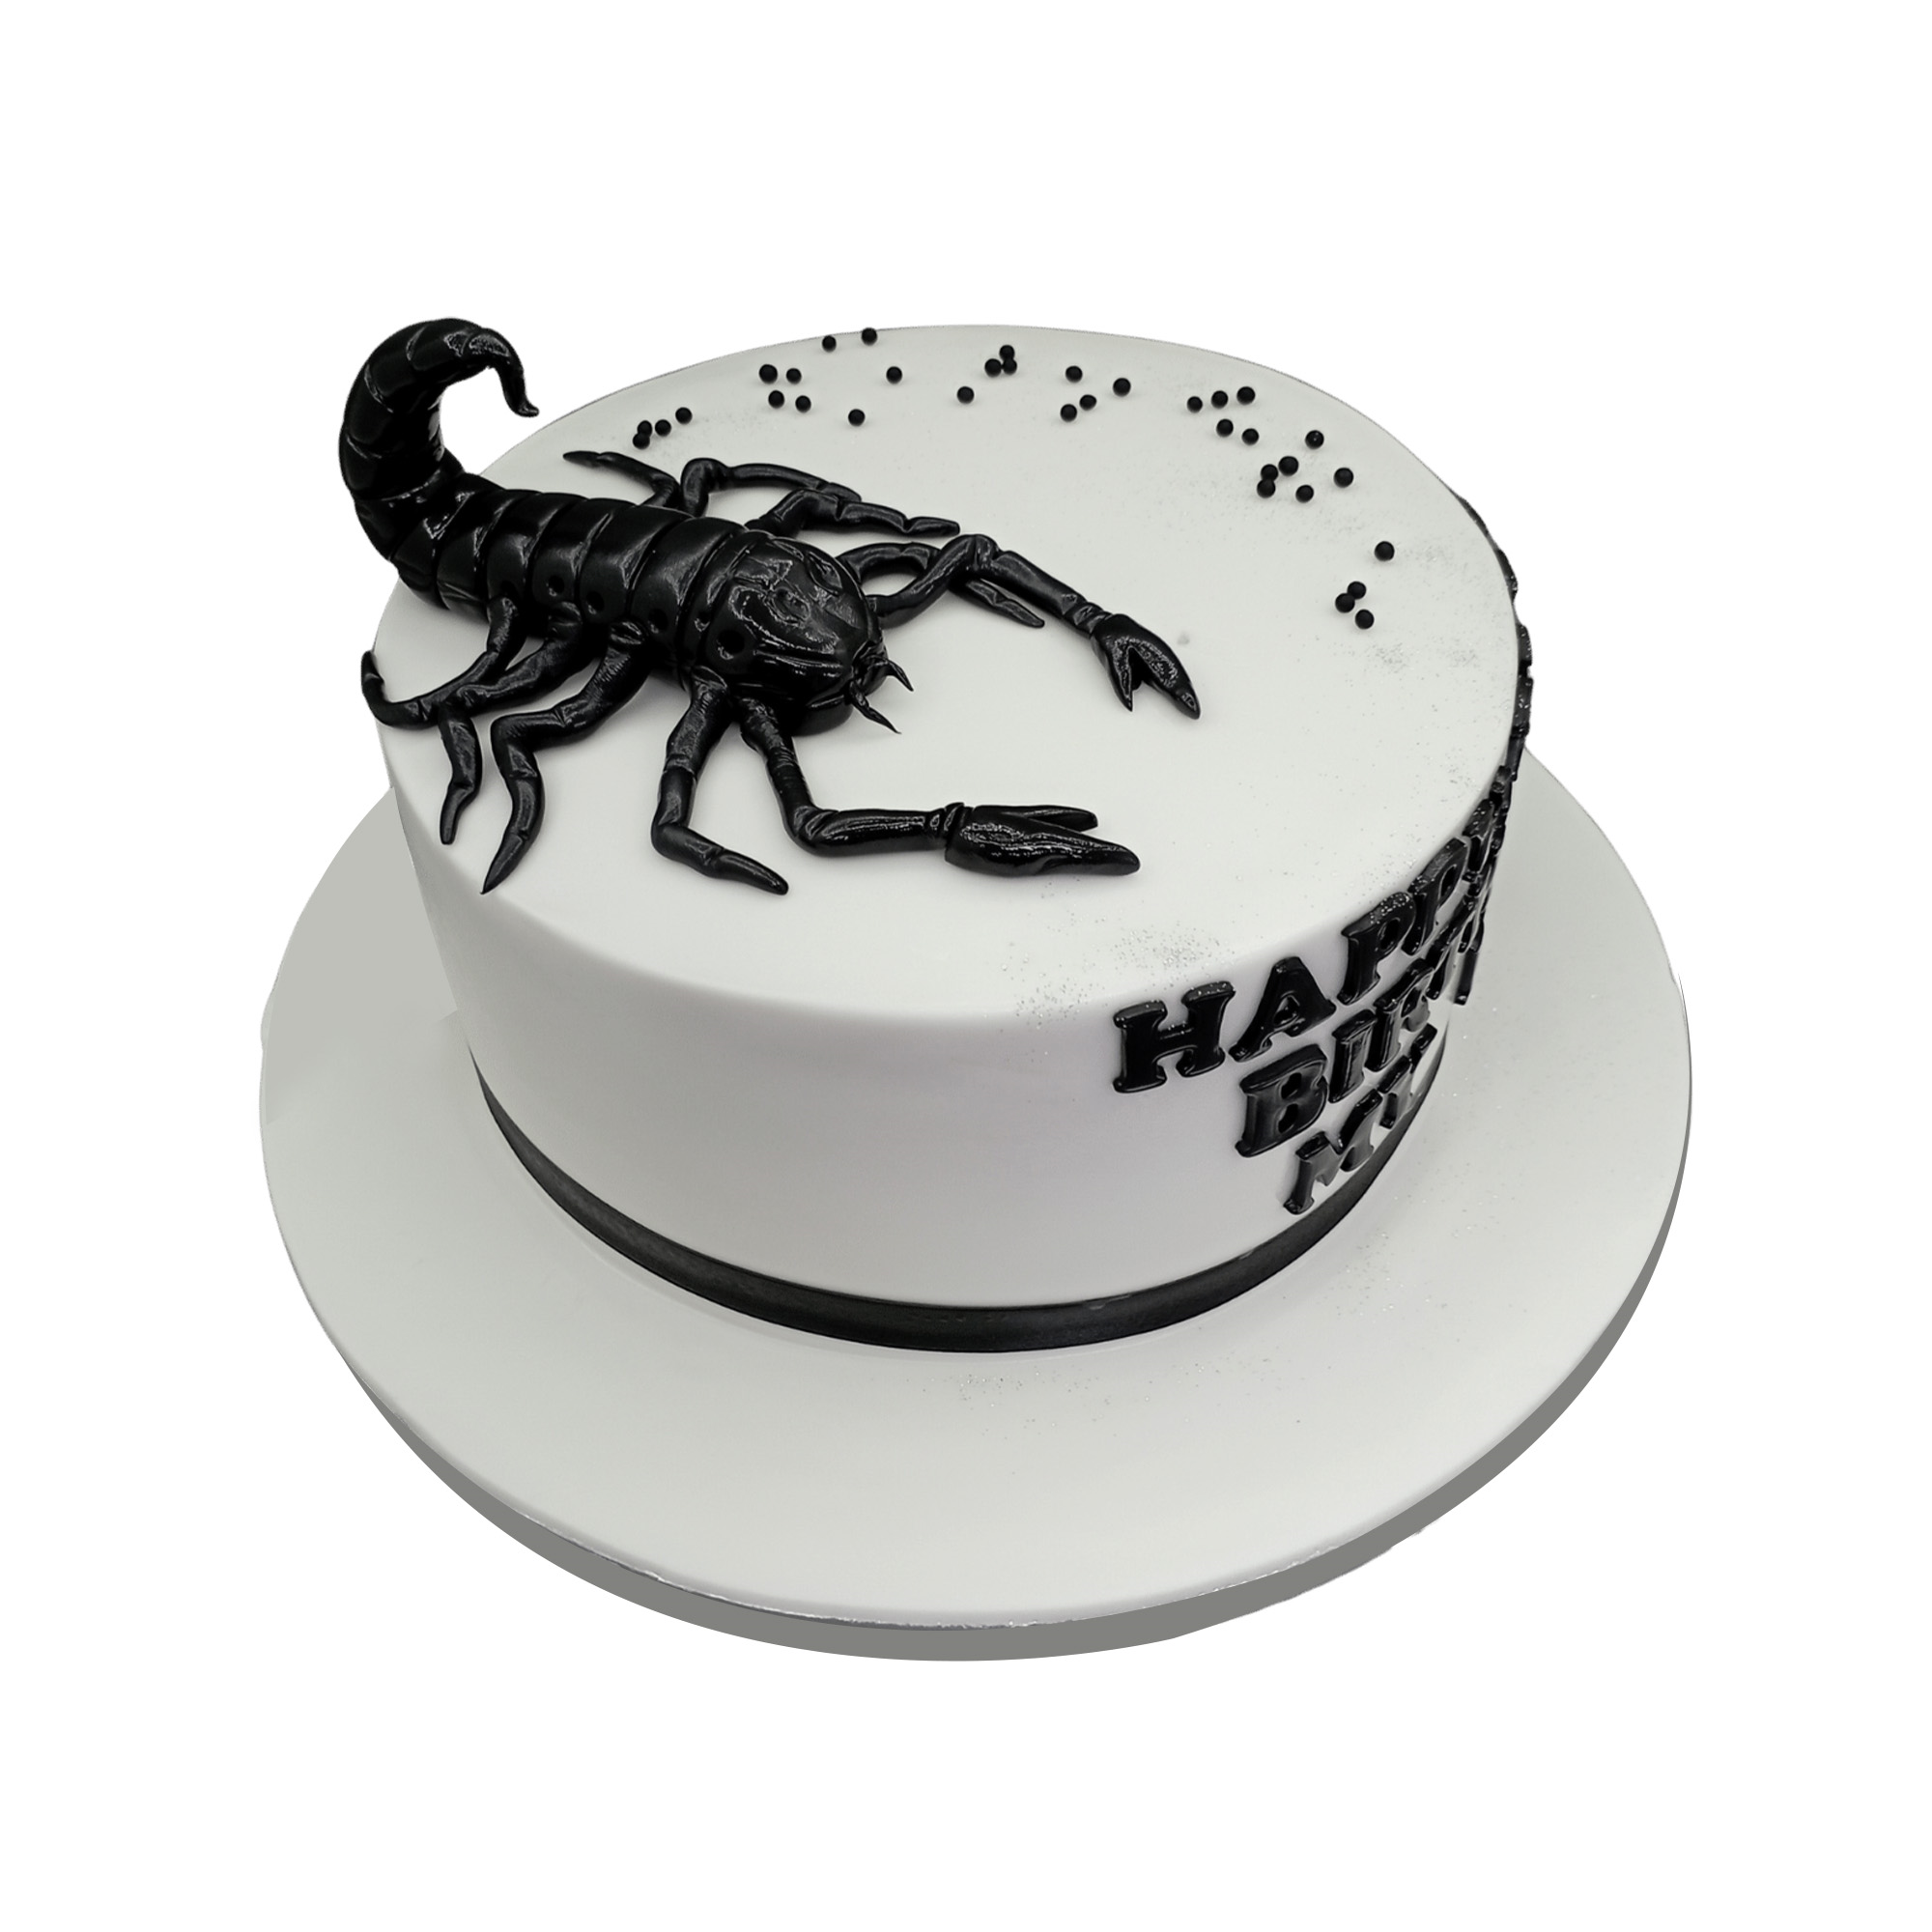 Spider Themed  cake